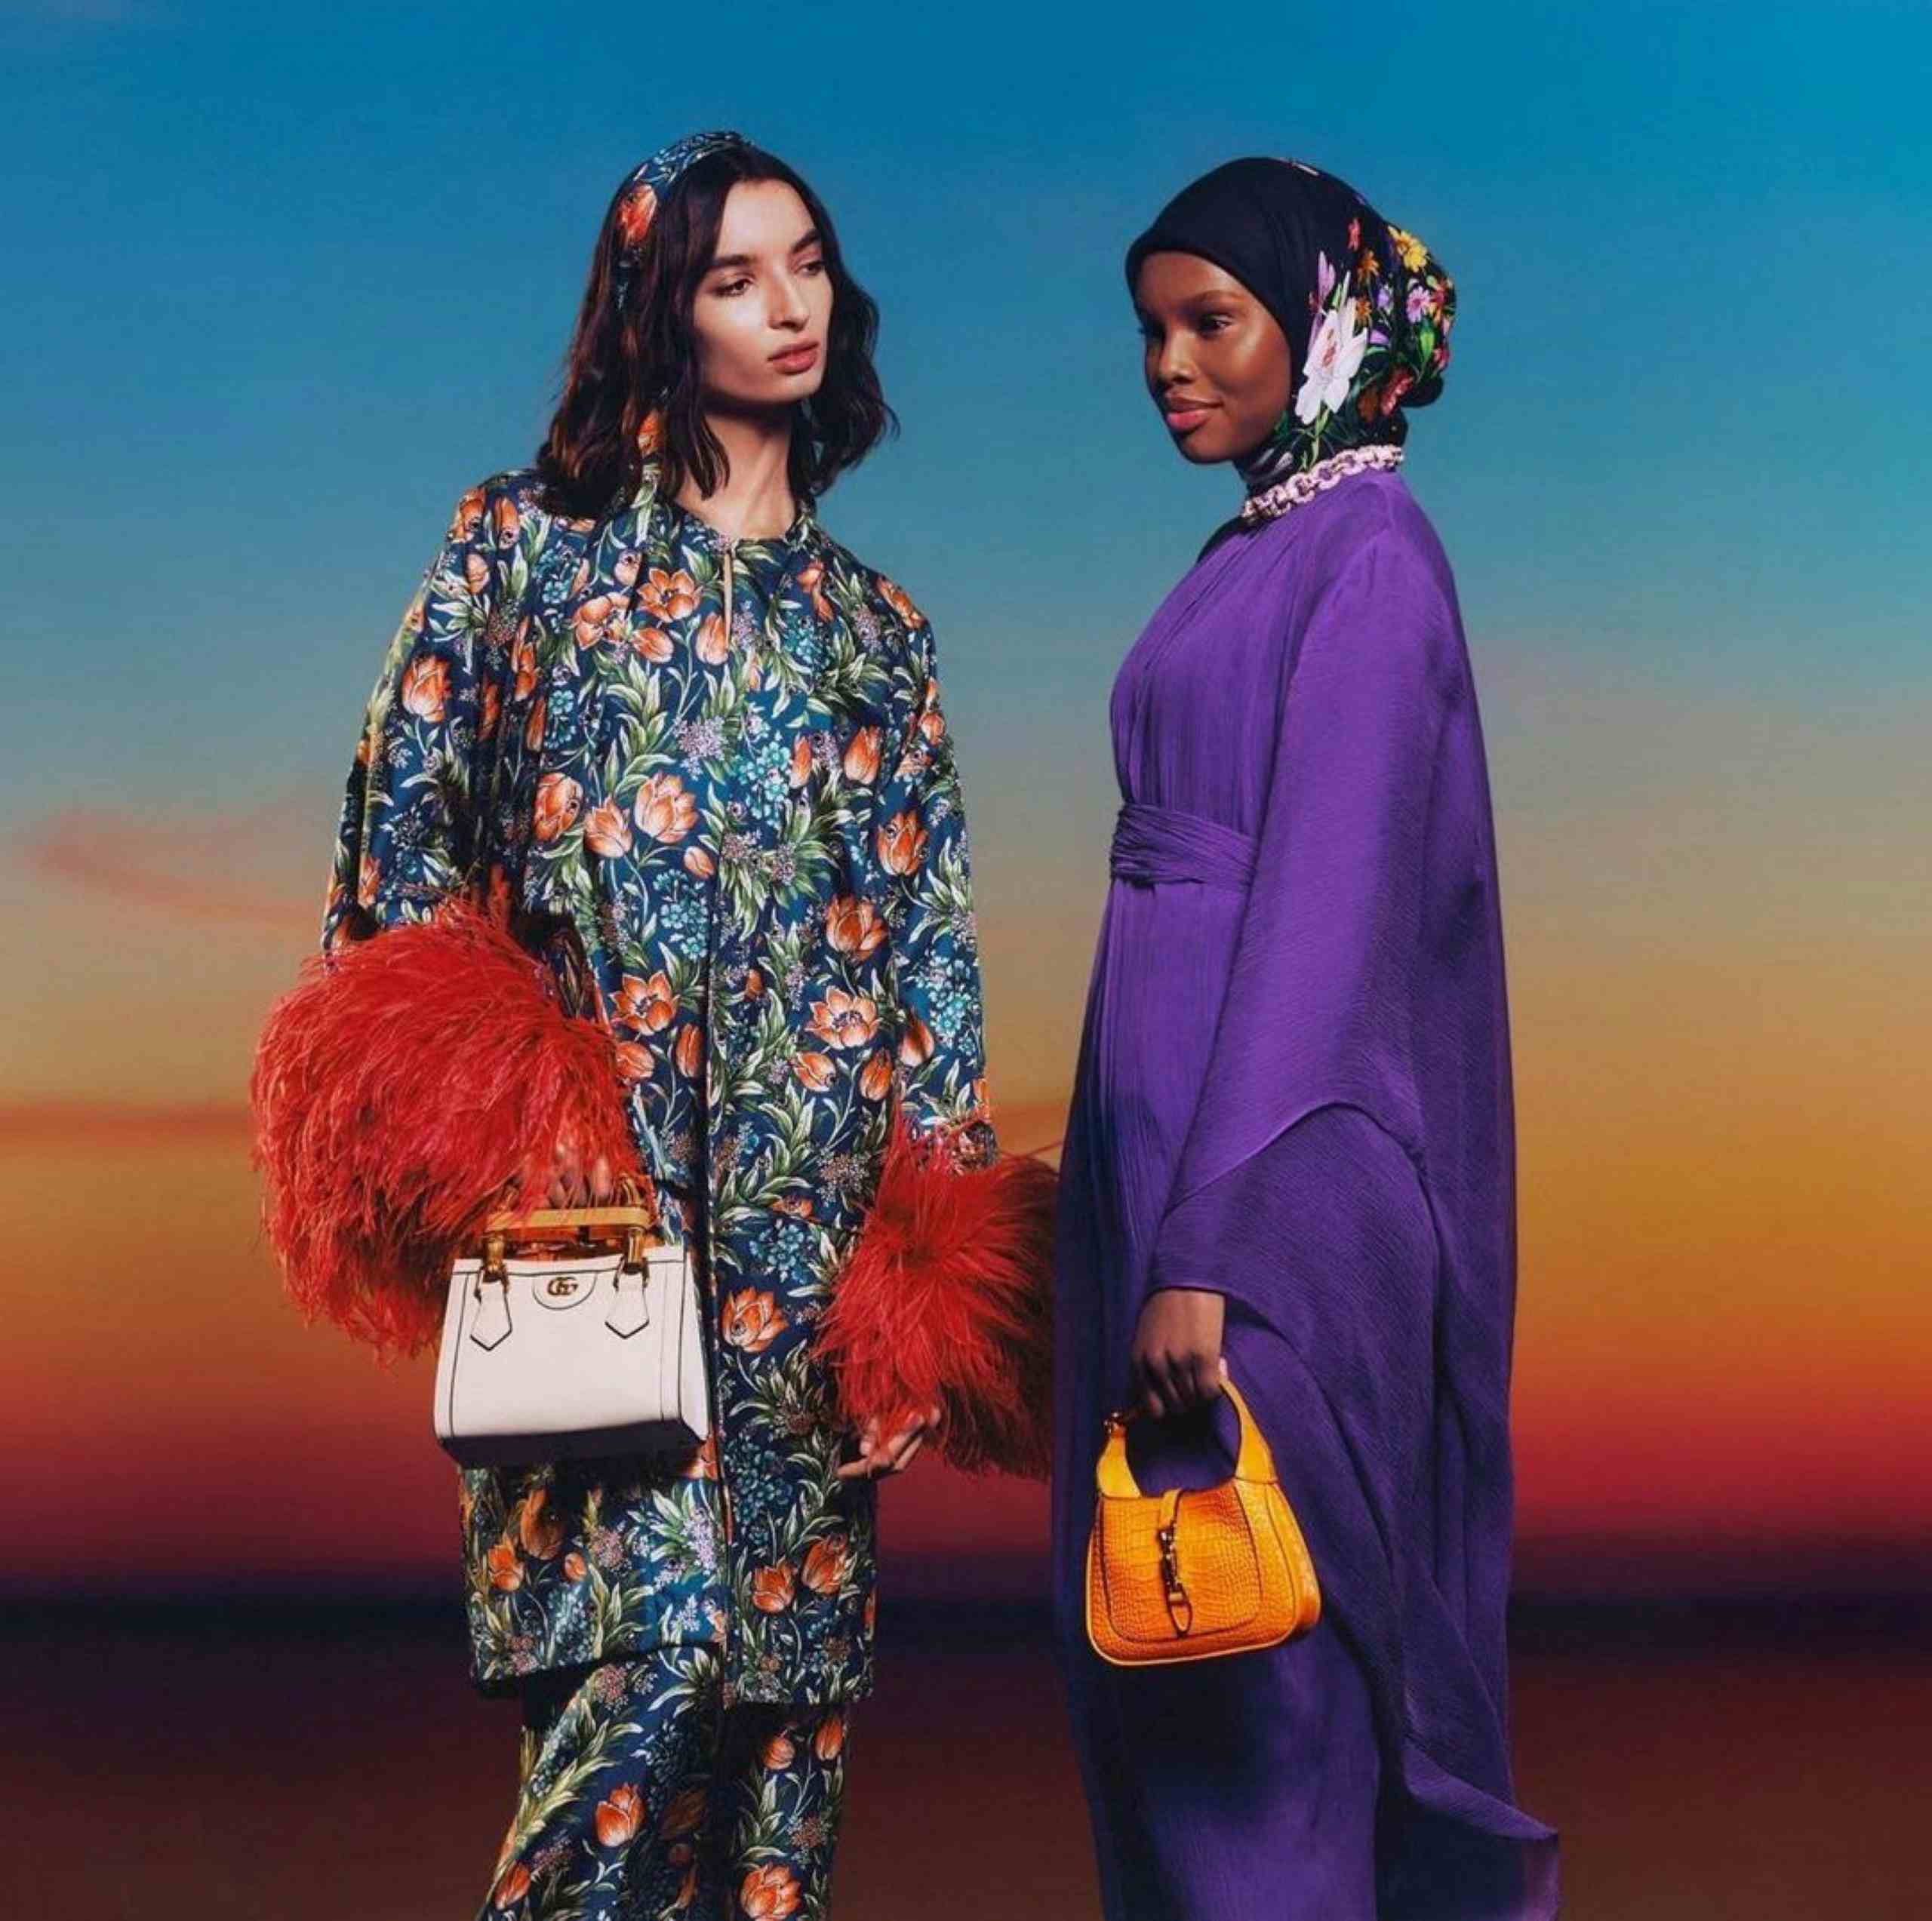 VOGUE ARABIA -  Vogue Arabia x Gucci
Photographer: Scandebergs
Model: Amina Adan, Emma Goune, Yoesry, Halima
